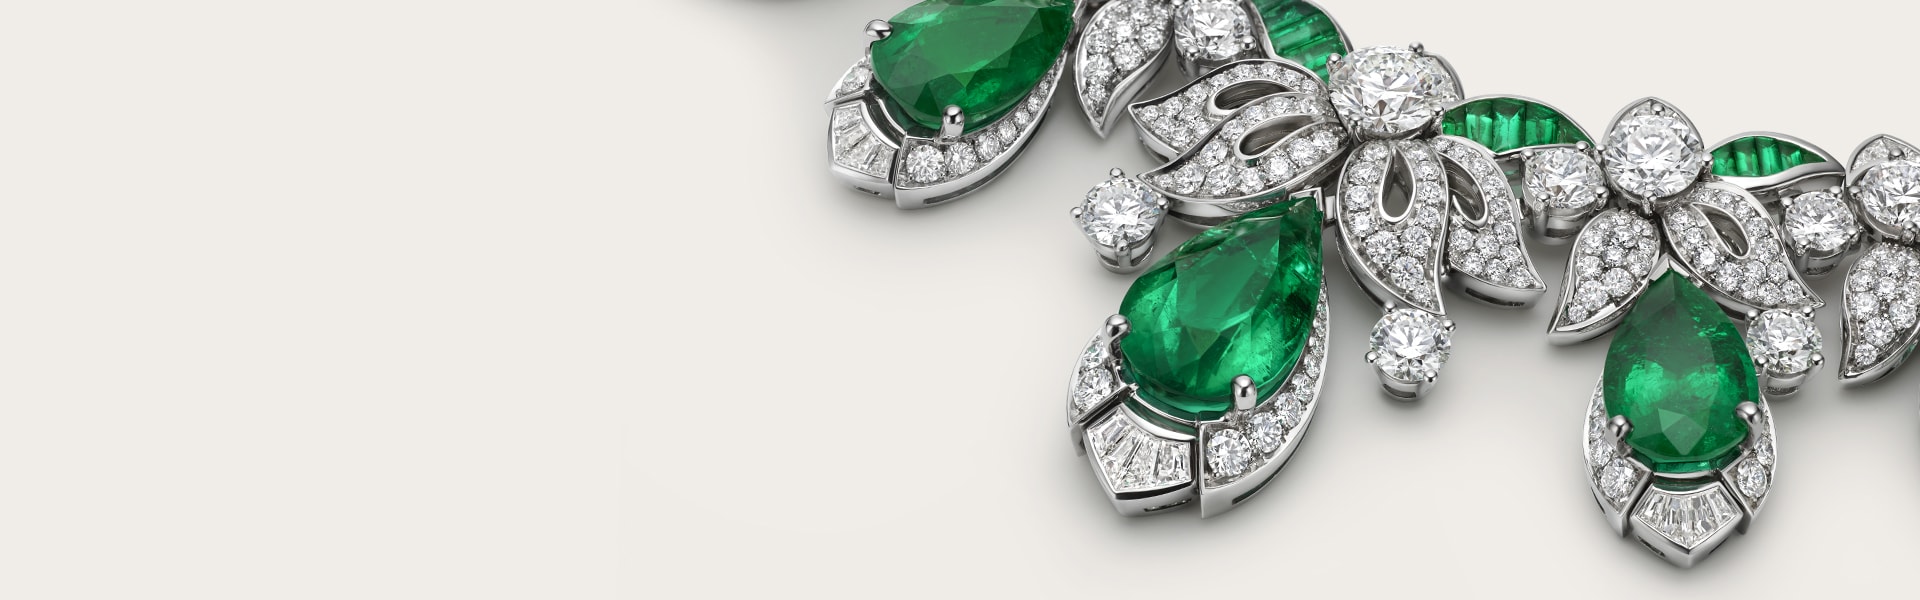 Acanthus Emerald Mediterranea High Jewelry platinum necklace with emeralds and diamonds, close-up.